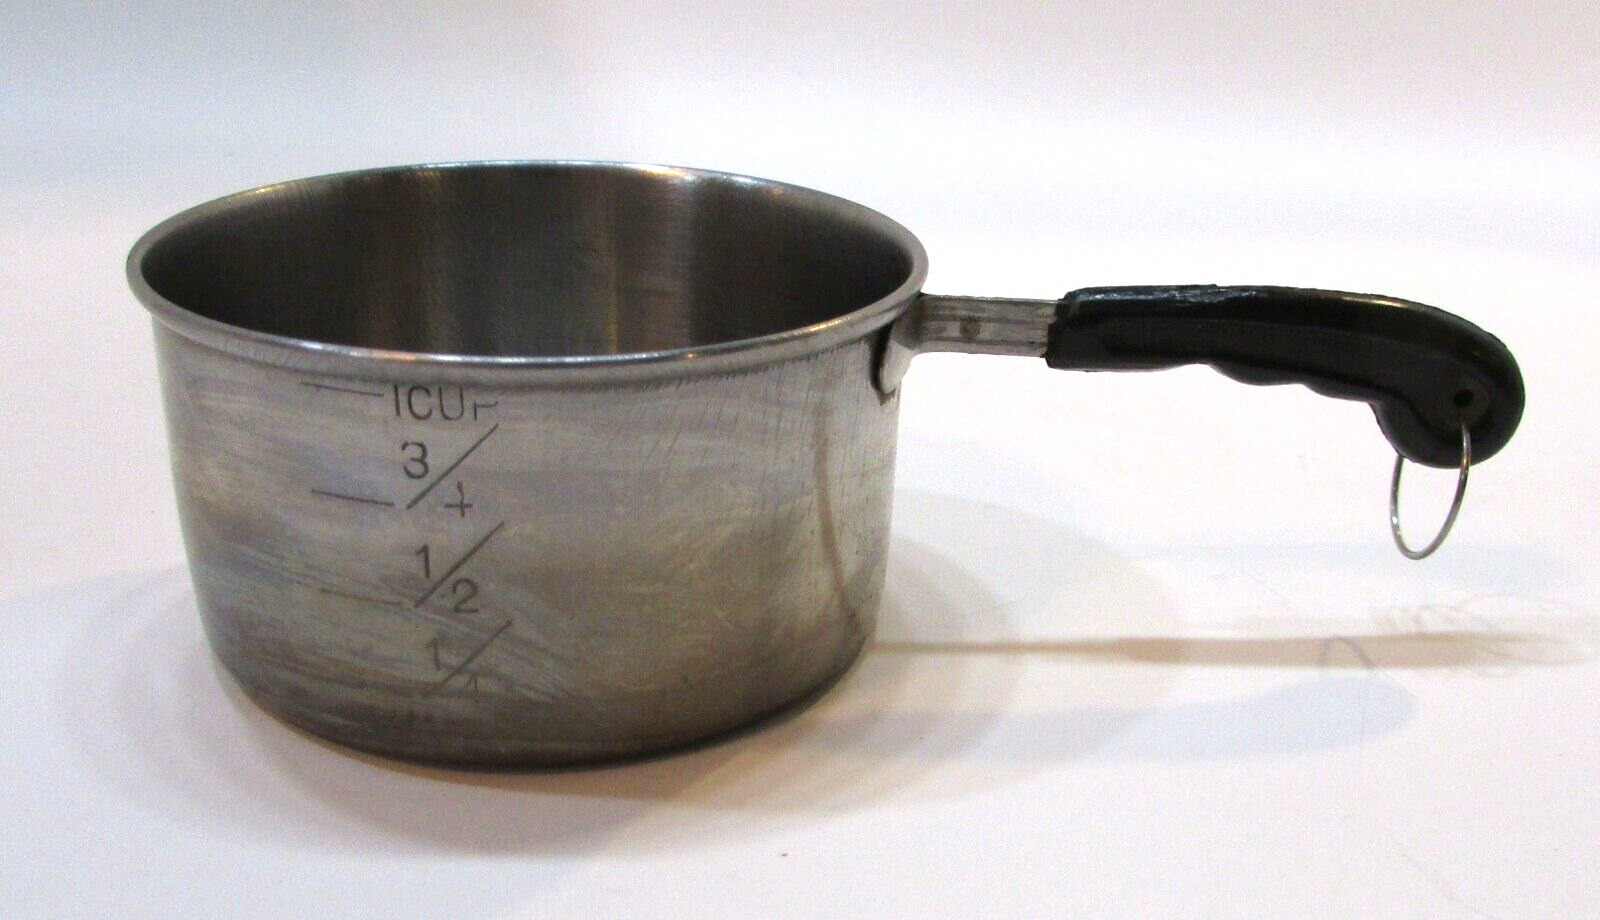 Primitive Old 1970's Revere Ware Saucepan Shaped Vintage 1 Cup Measuring Pan